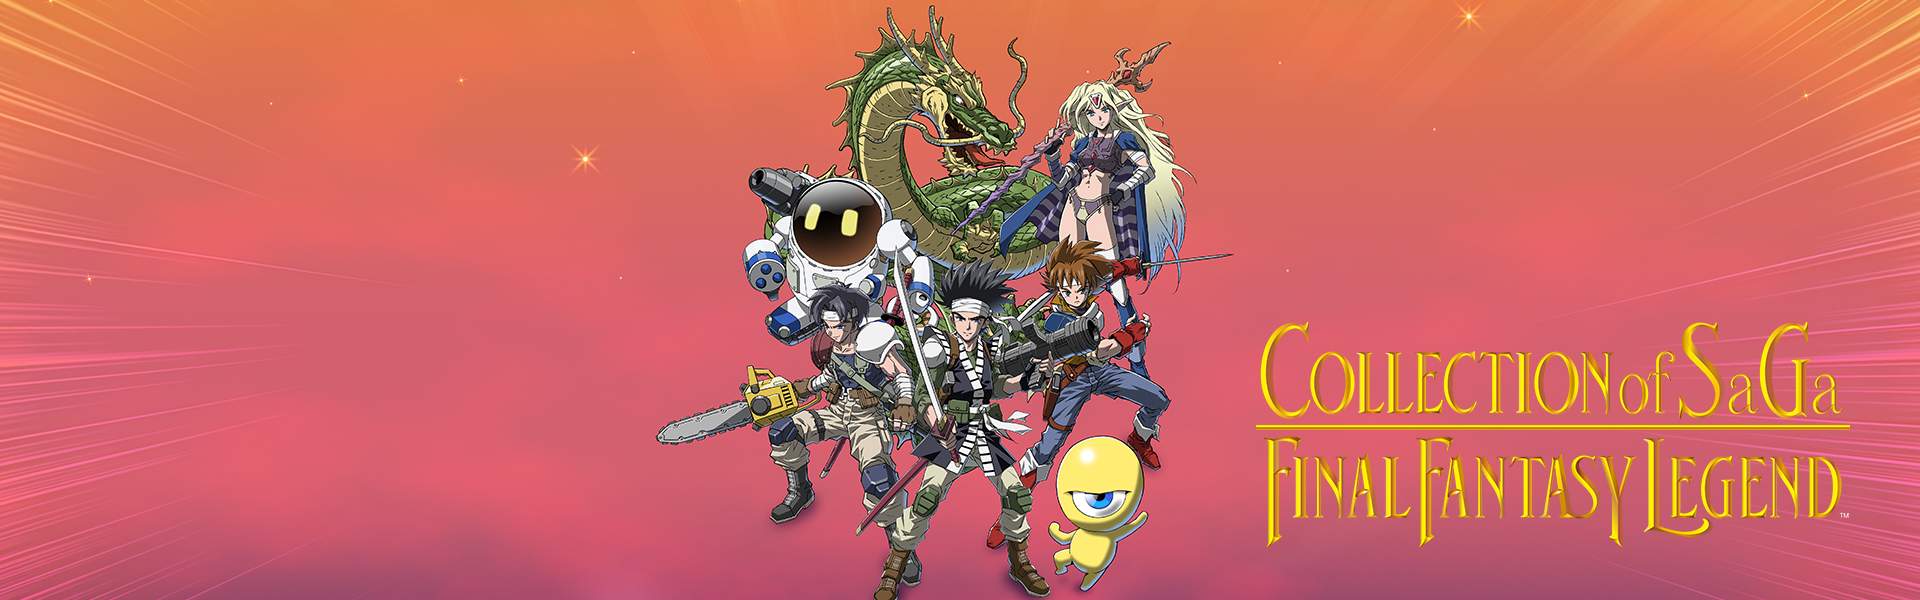 Banner da COLLECTION of SaGa FINAL FANTASY LEGEND™ exibindo os personagens e o logotipo do jogo